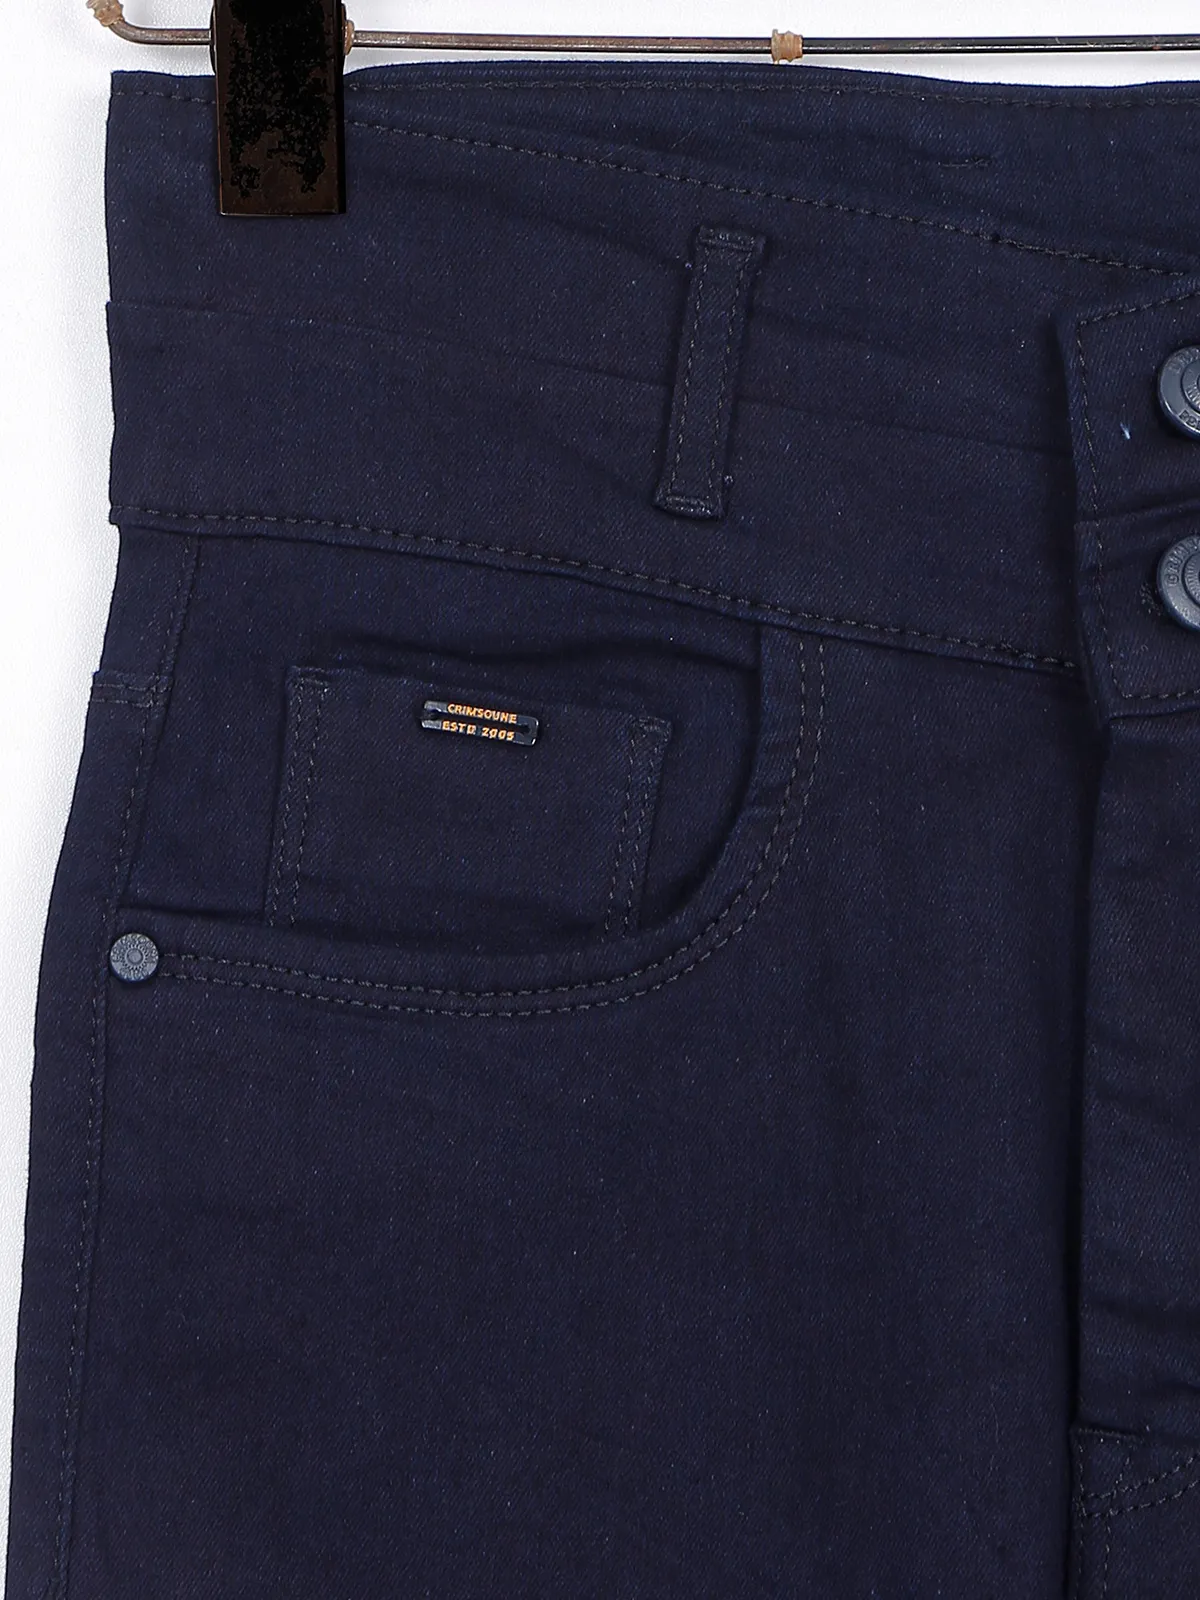 Crimsone Club navy solid jeans